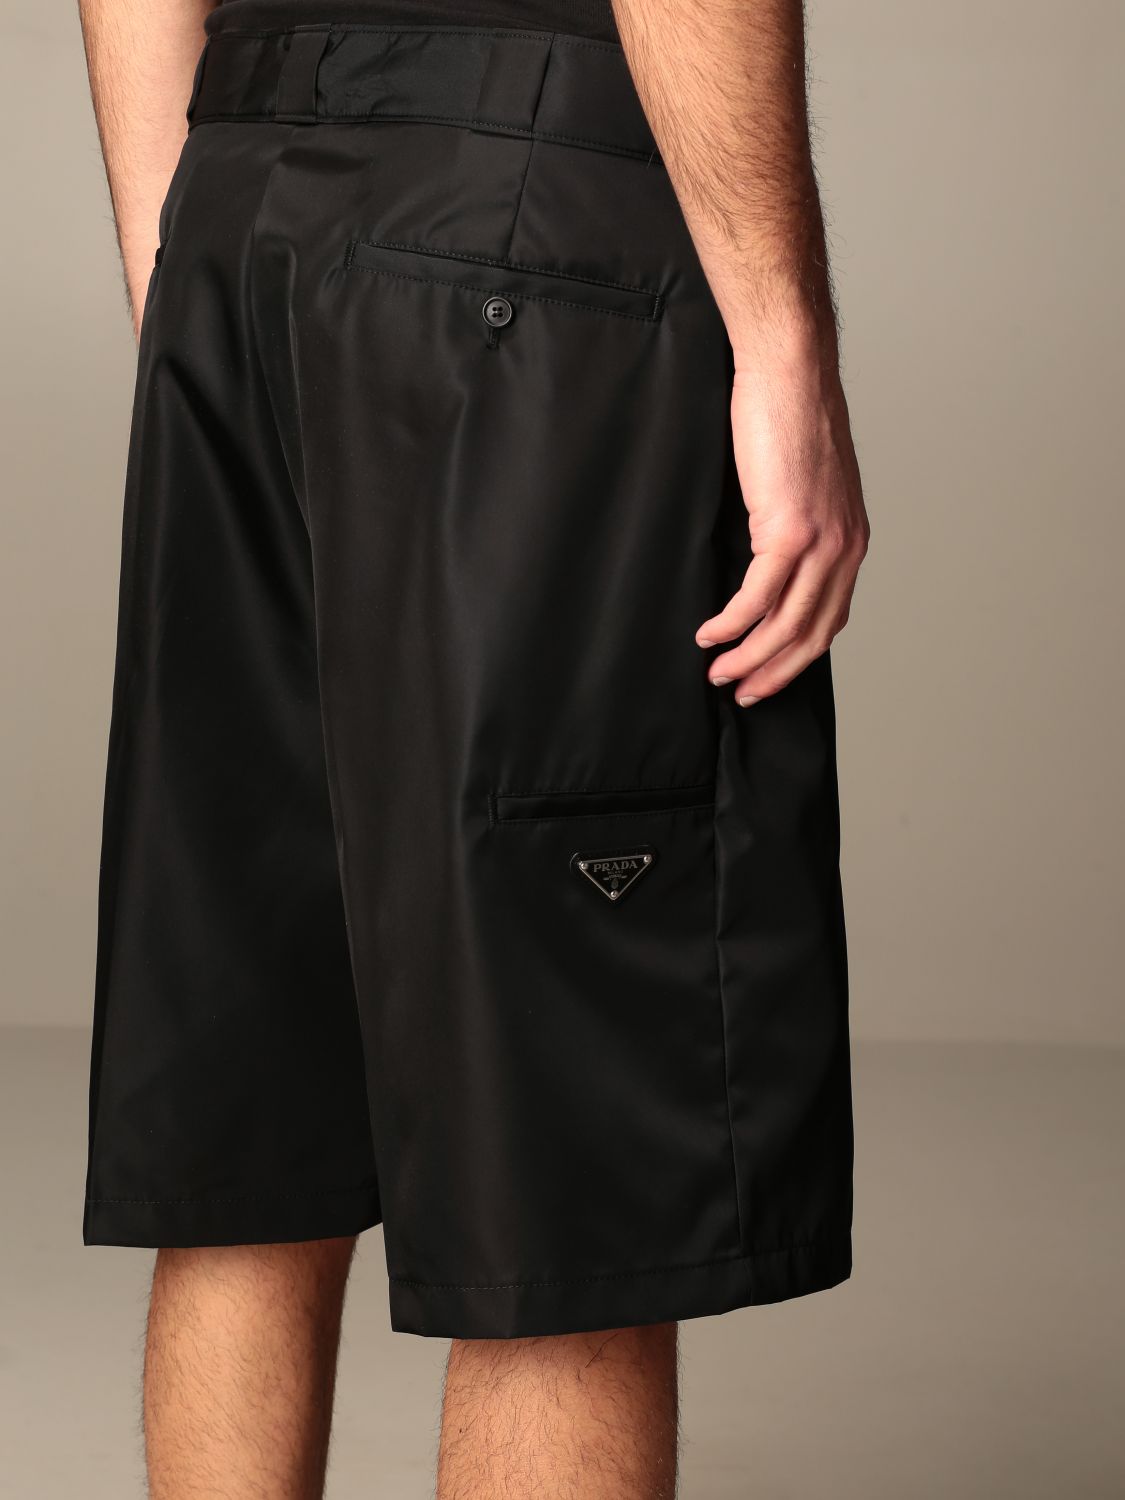 prada shorts for men